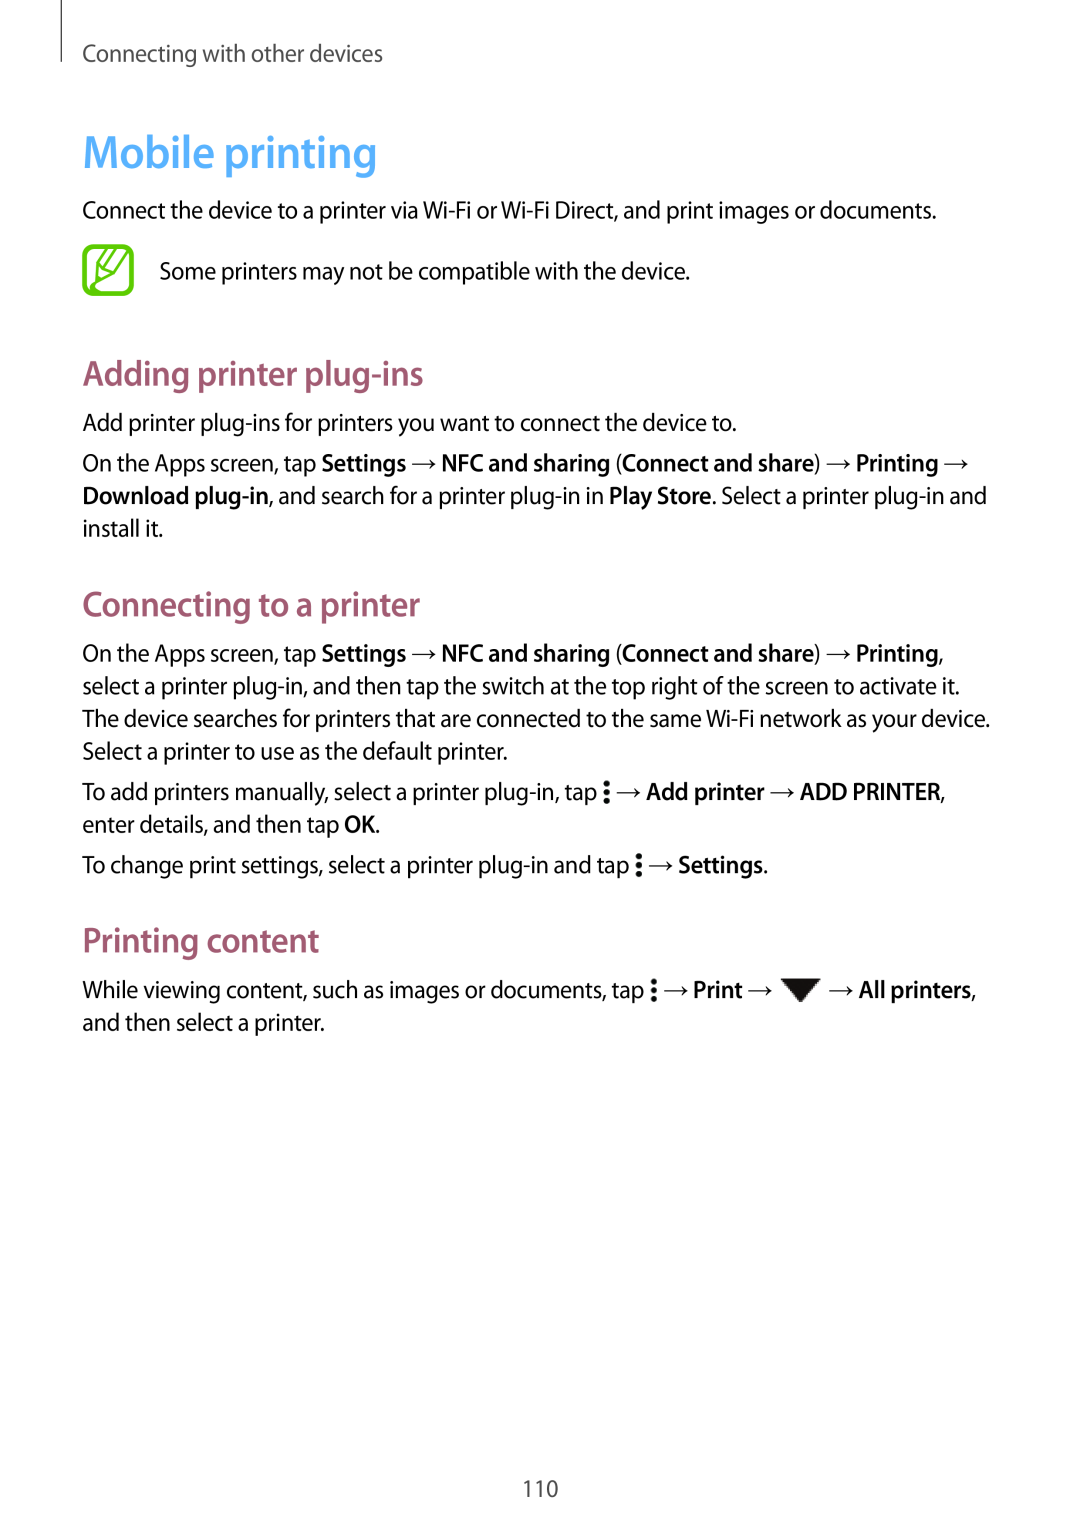 Samsung SM-A700FZWAATO, SM-A700FZKADBT Mobile printing, Adding printer plug-ins, Connecting to a printer, Printing content 